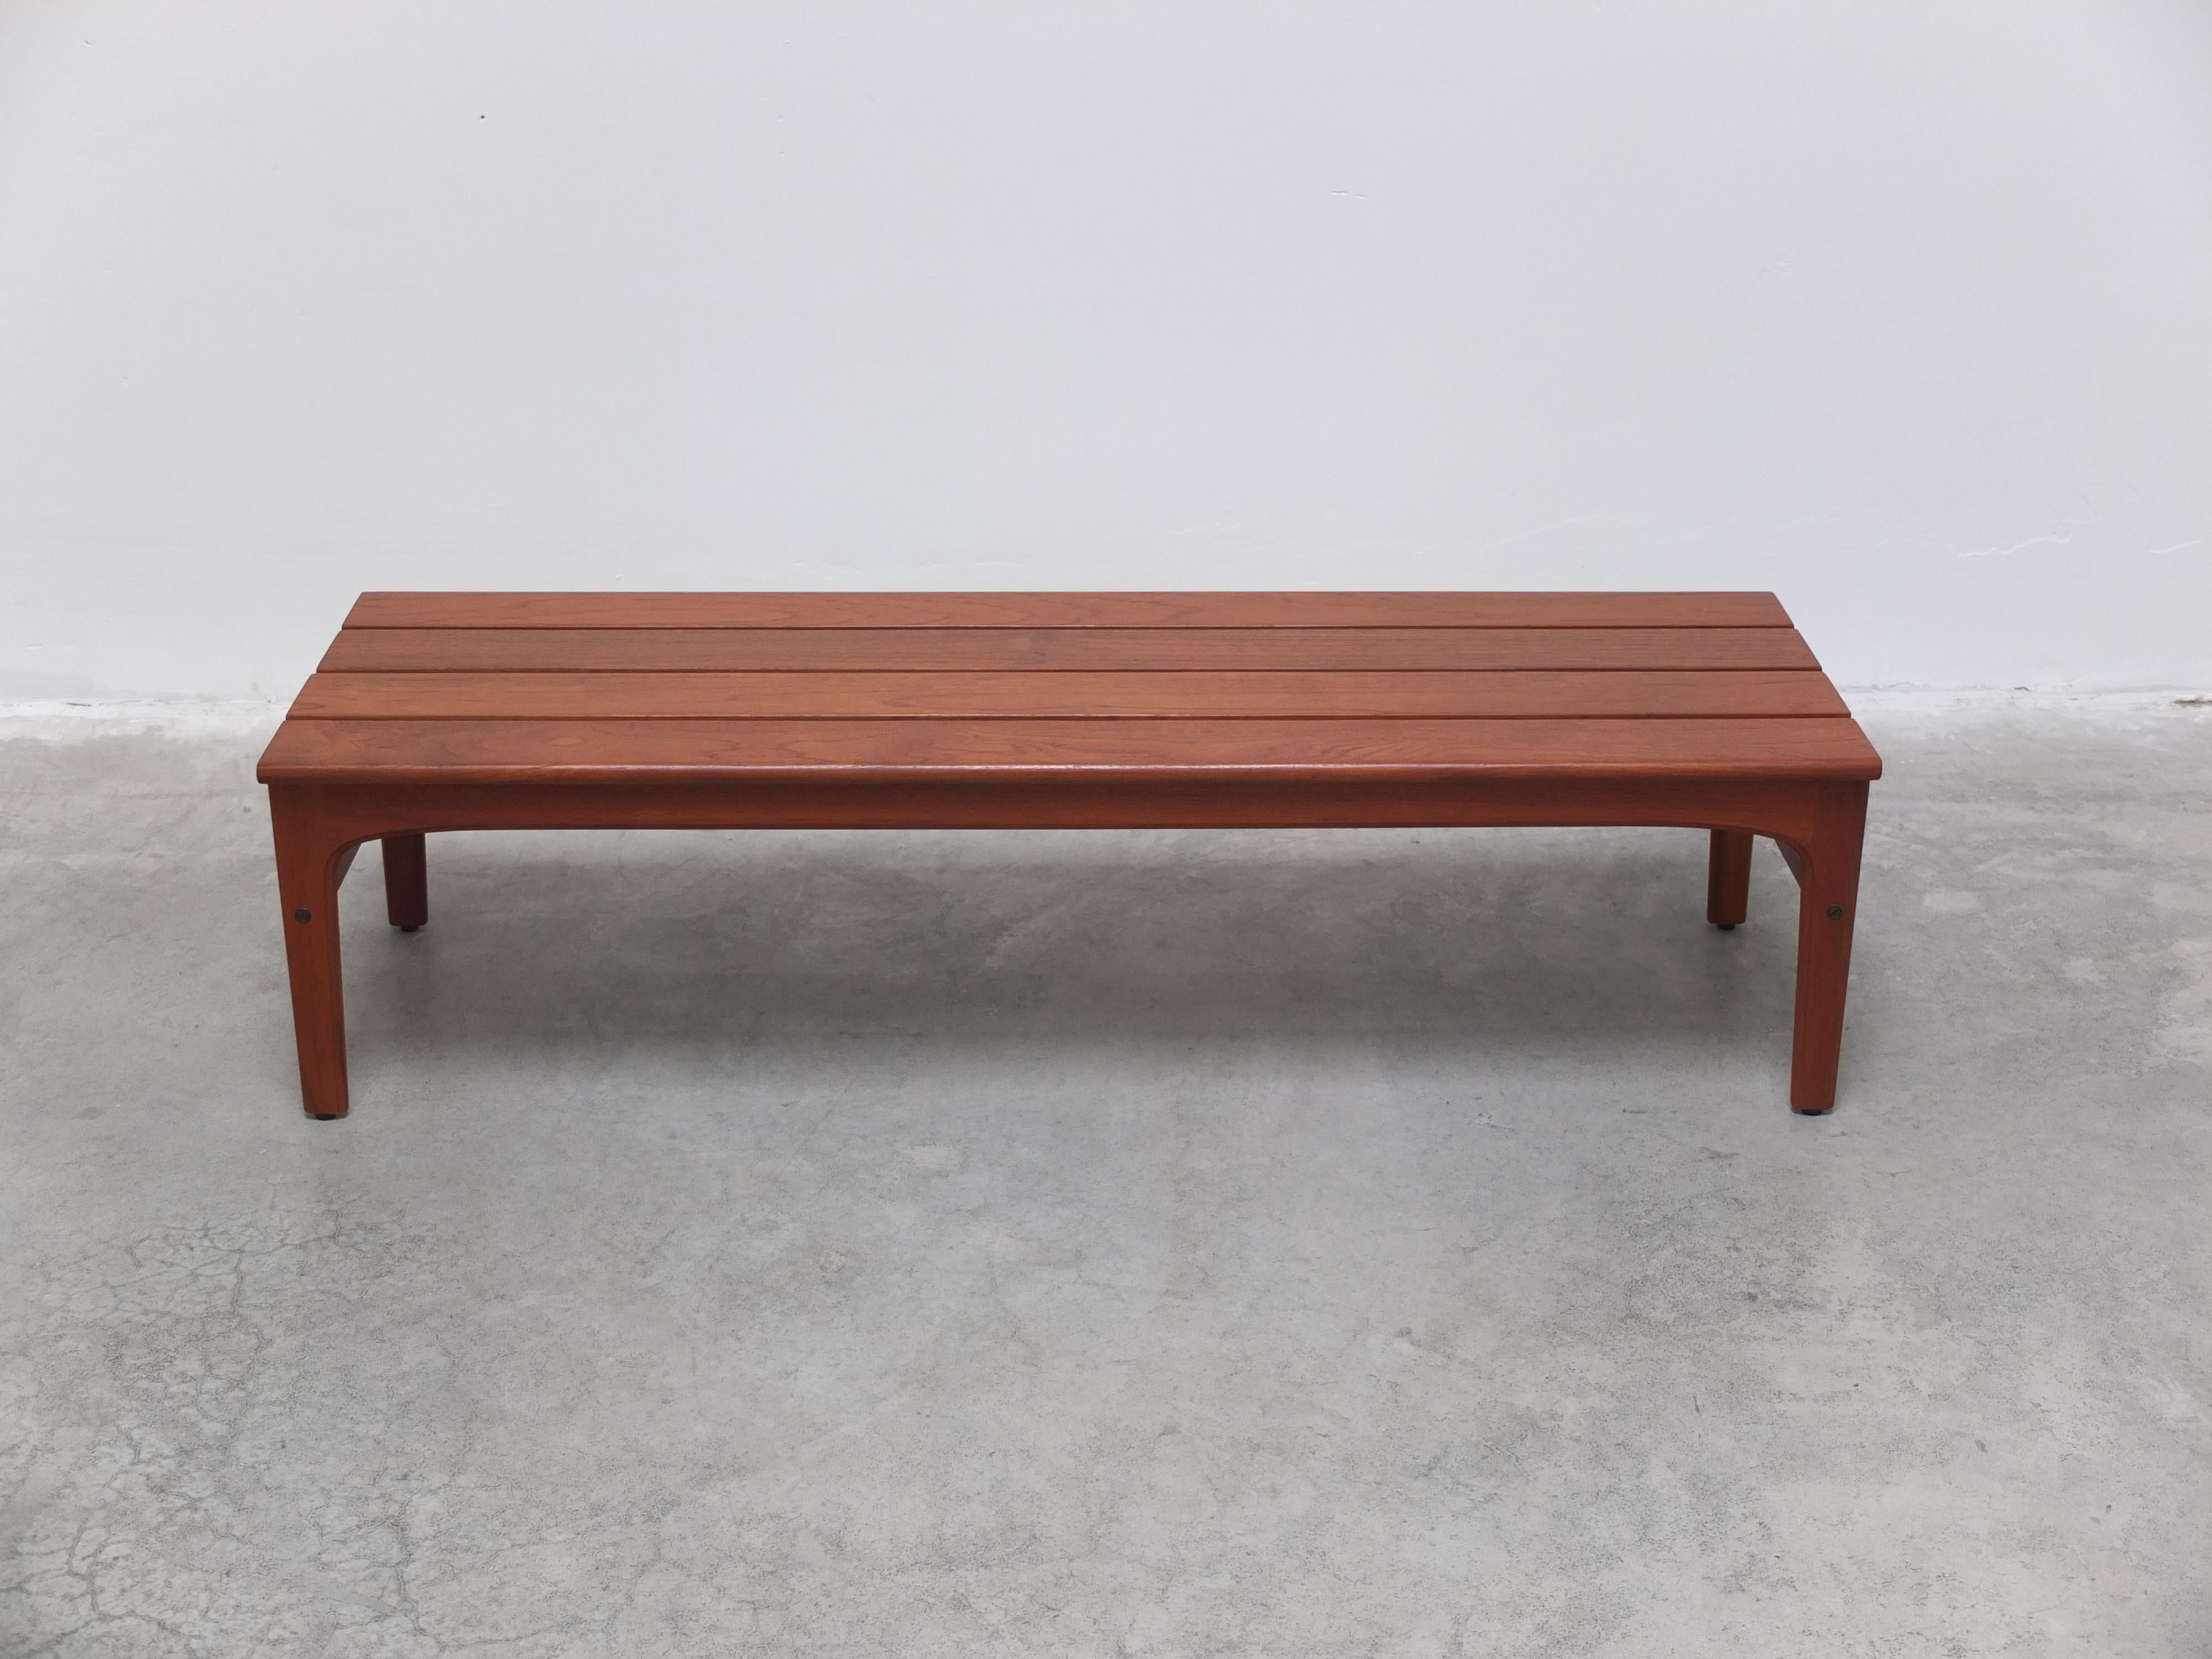 Scandinavian Modern Teak Slatted Bench or Coffee Table by Yngvar Sandström for AB Sëffle, 1960s For Sale